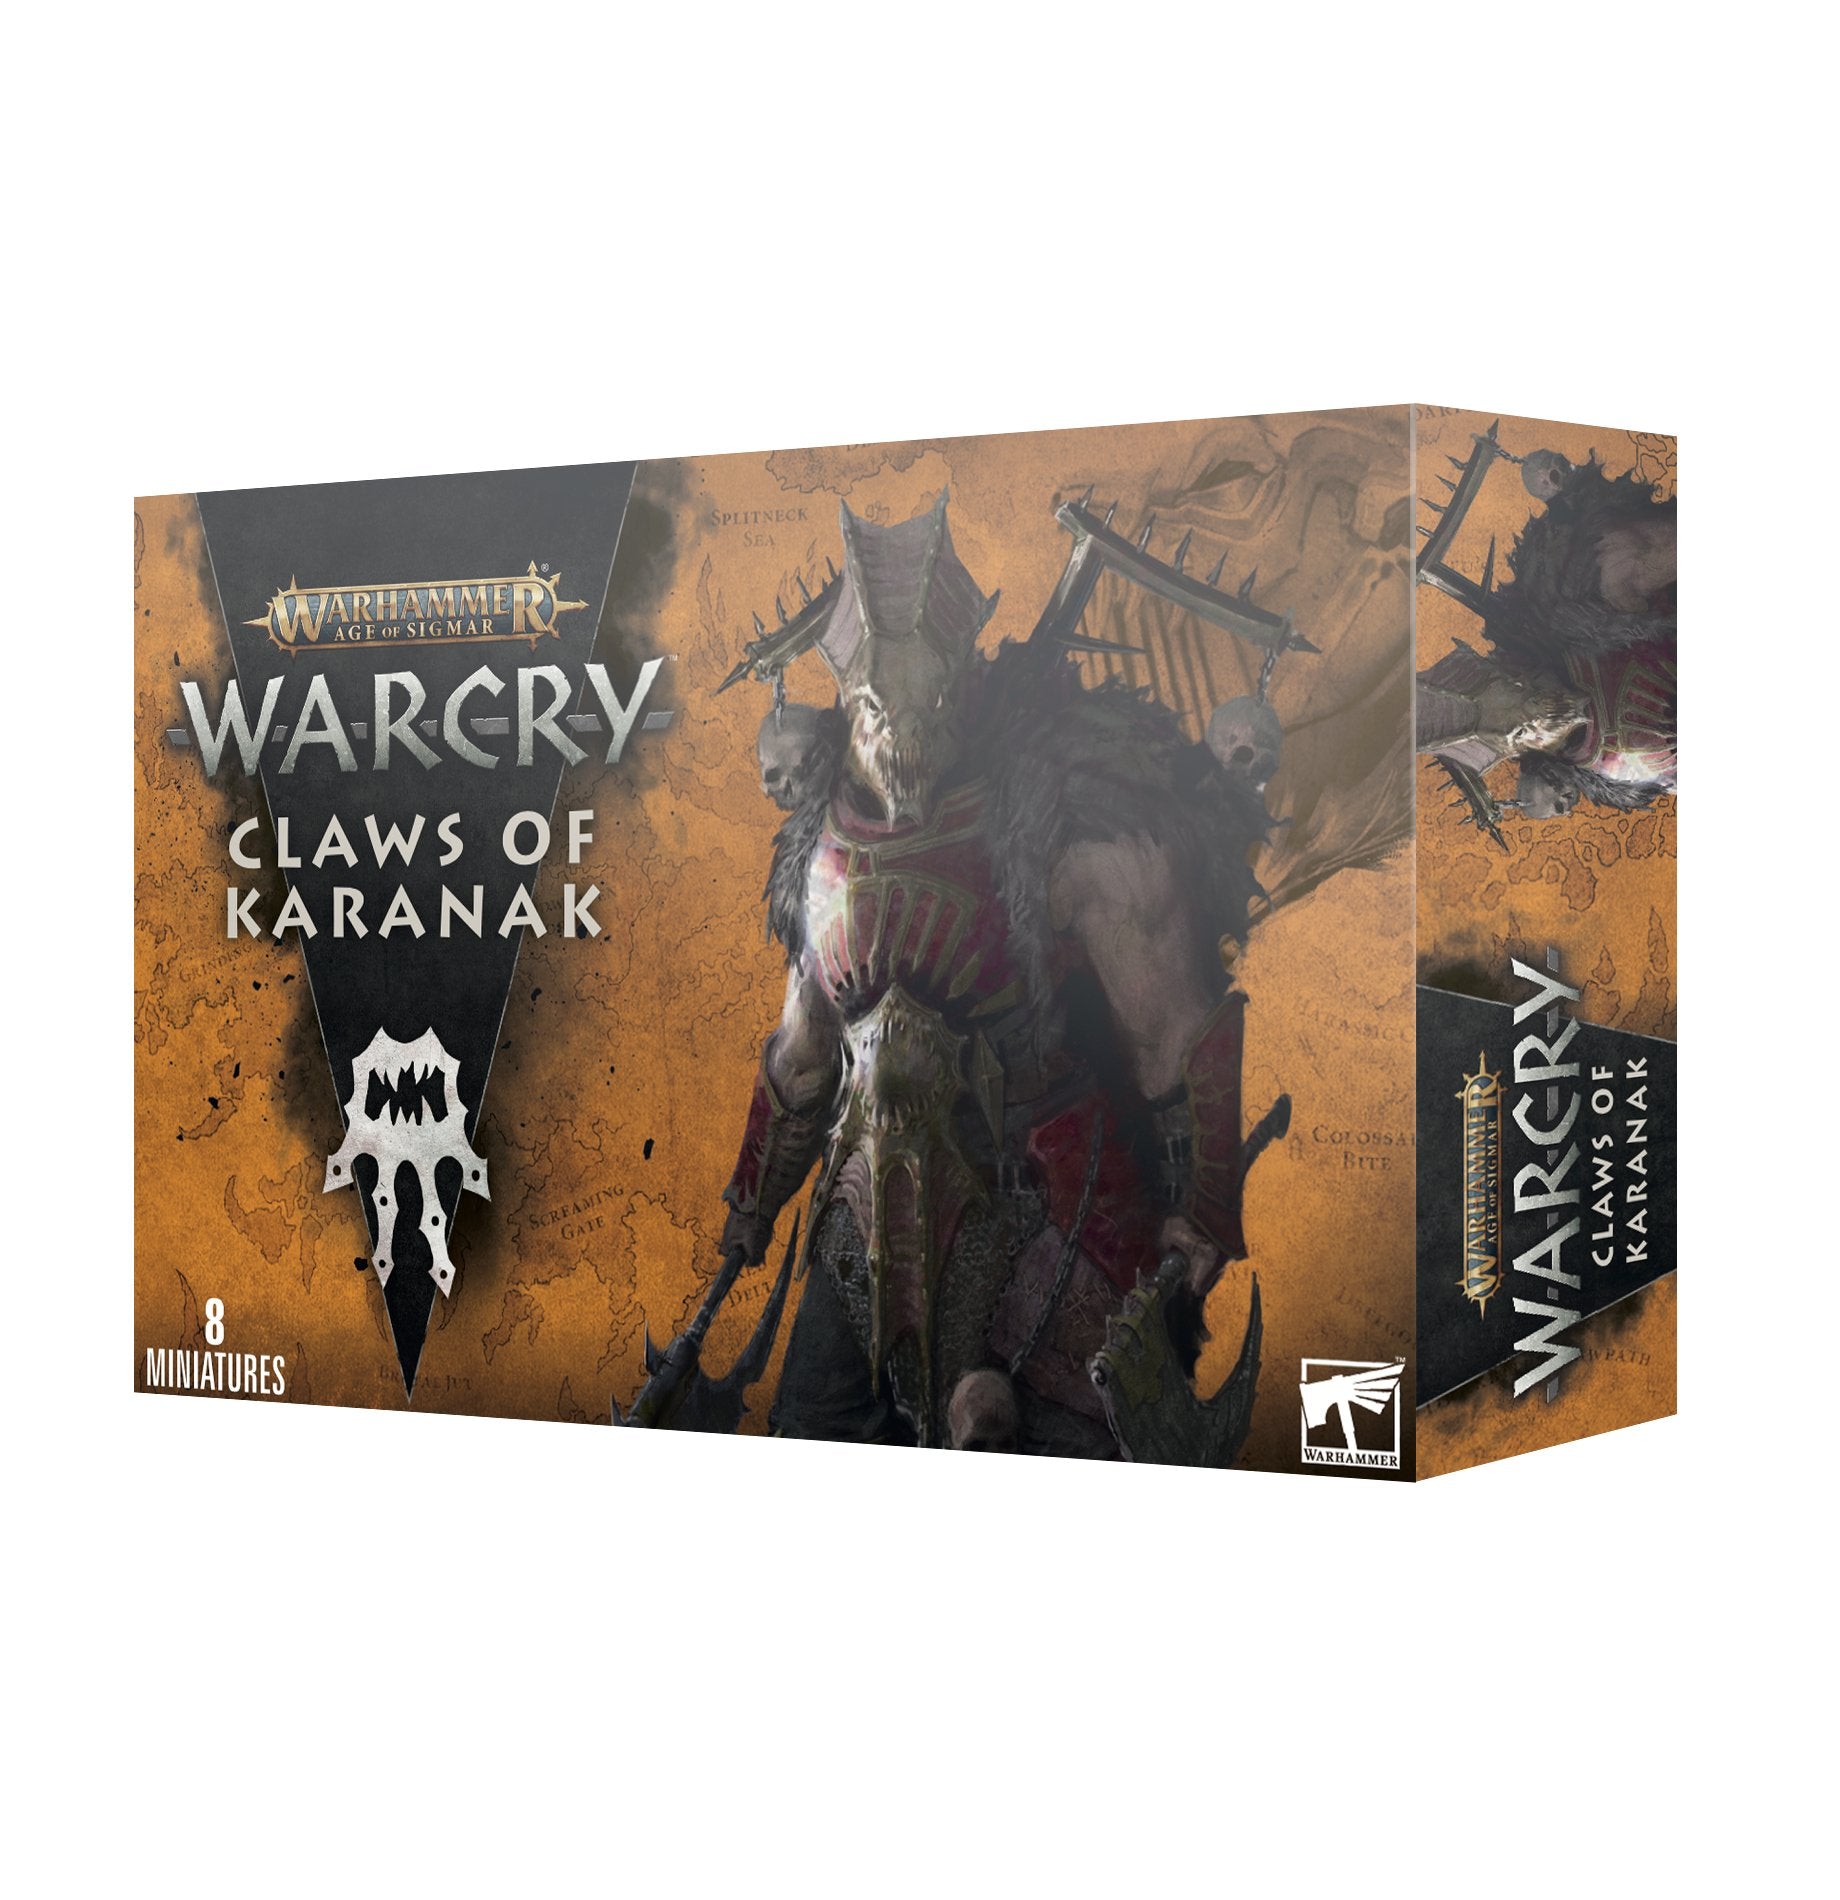 a box of war cry claws of karanark